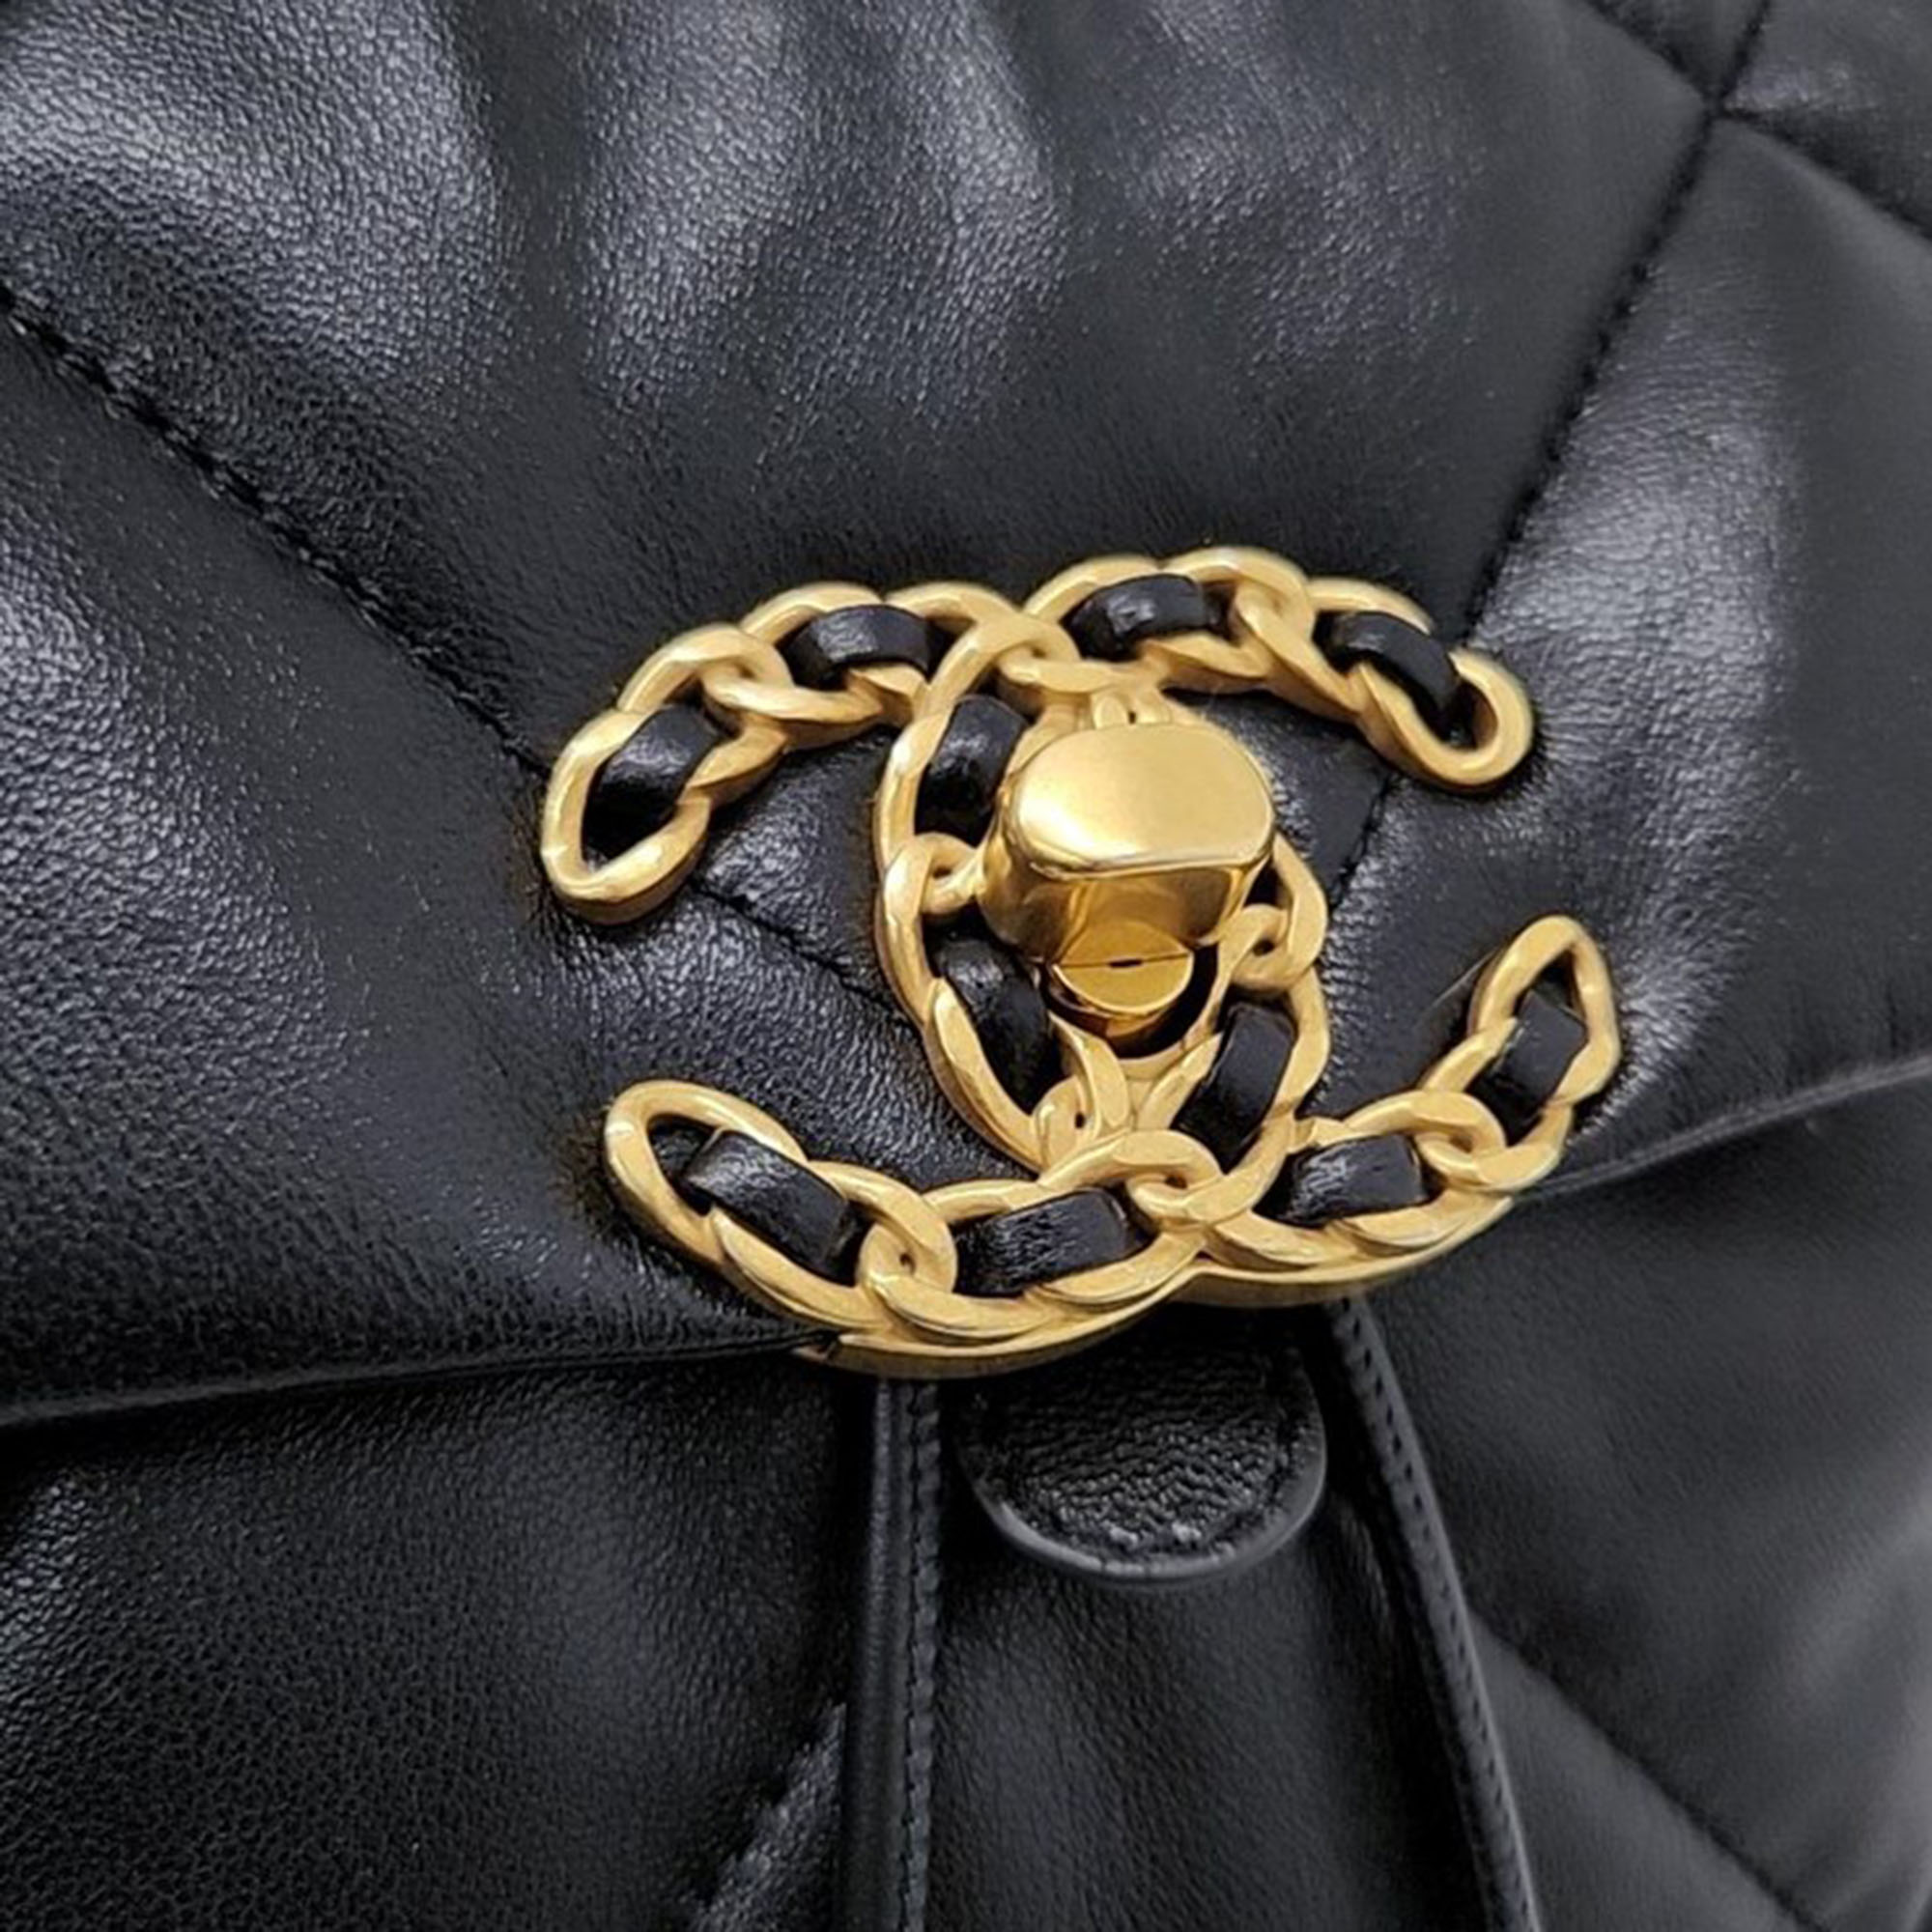 Chanel 19 Leather Black Backpack